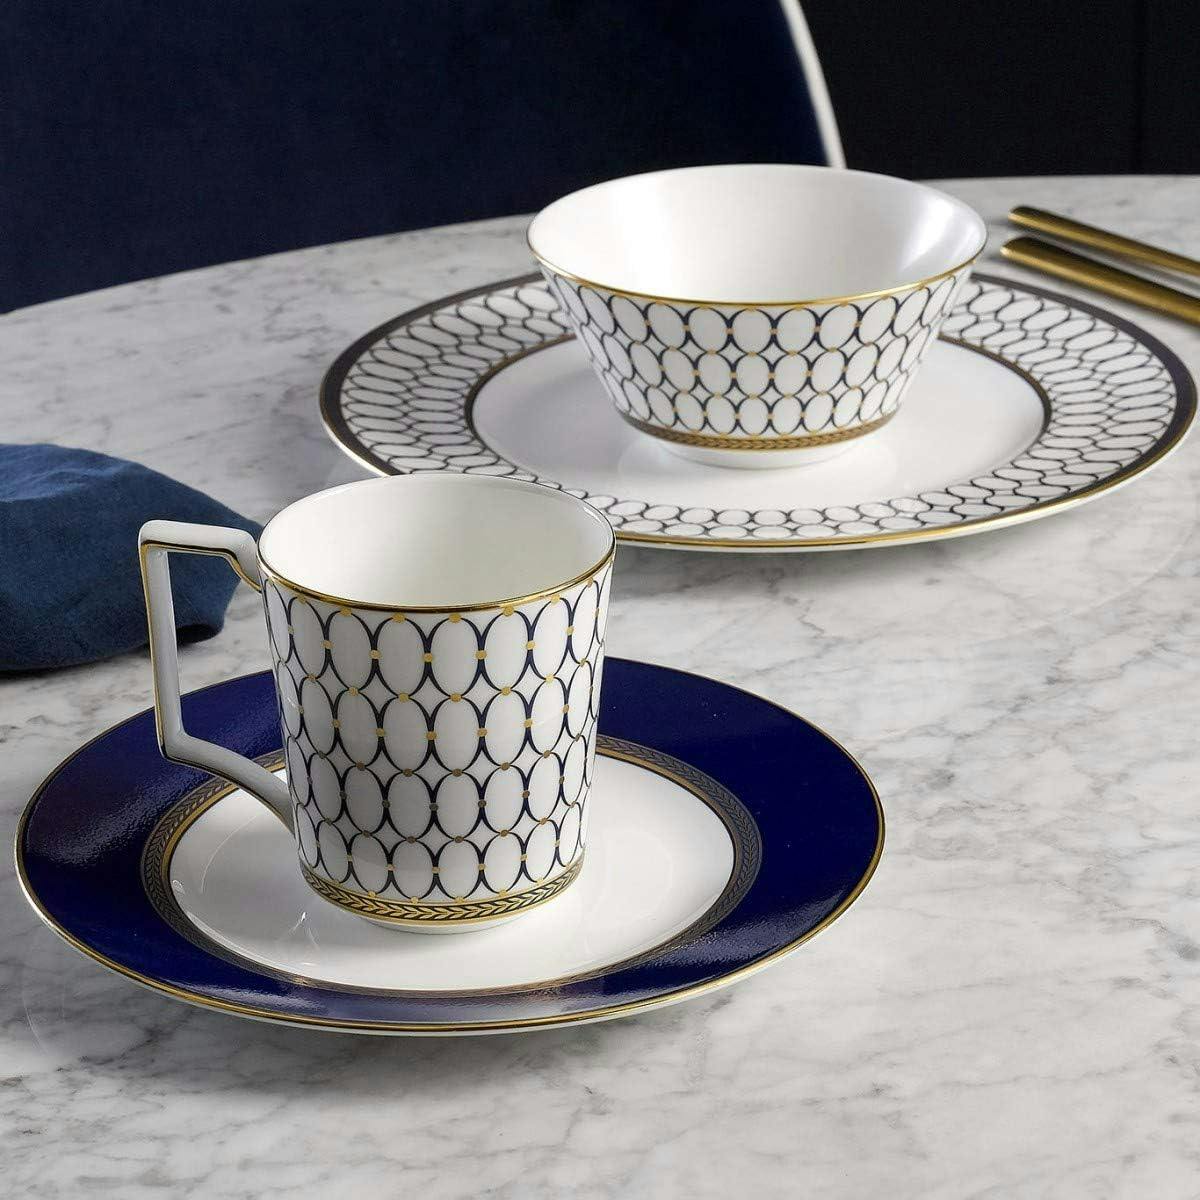 Renaissance Gold Porcelain 4-Piece Dinnerware Set for 1 - White